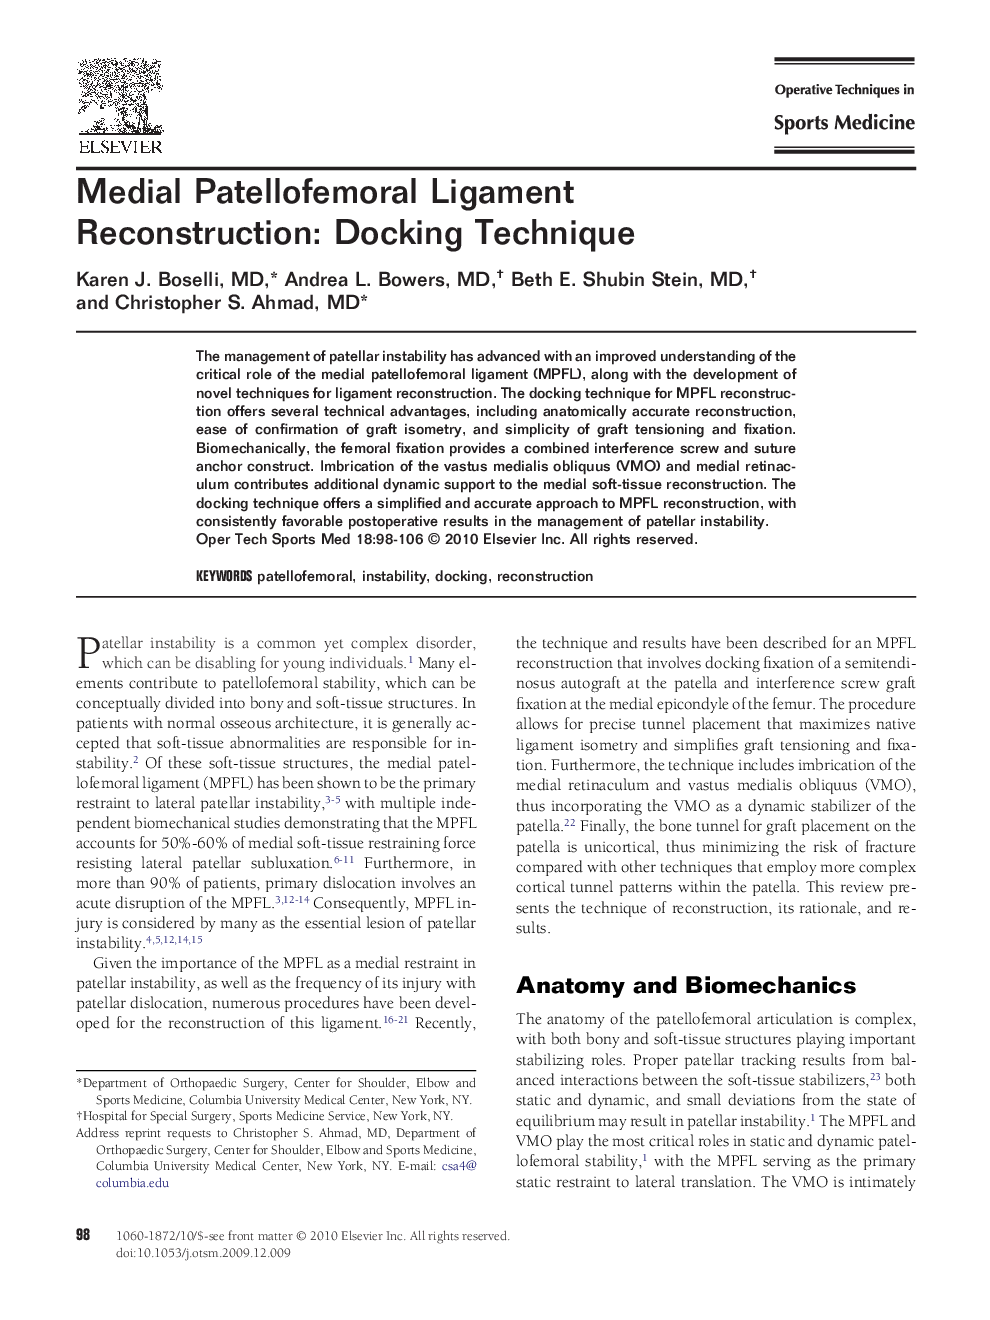 Medial Patellofemoral Ligament Reconstruction: Docking Technique